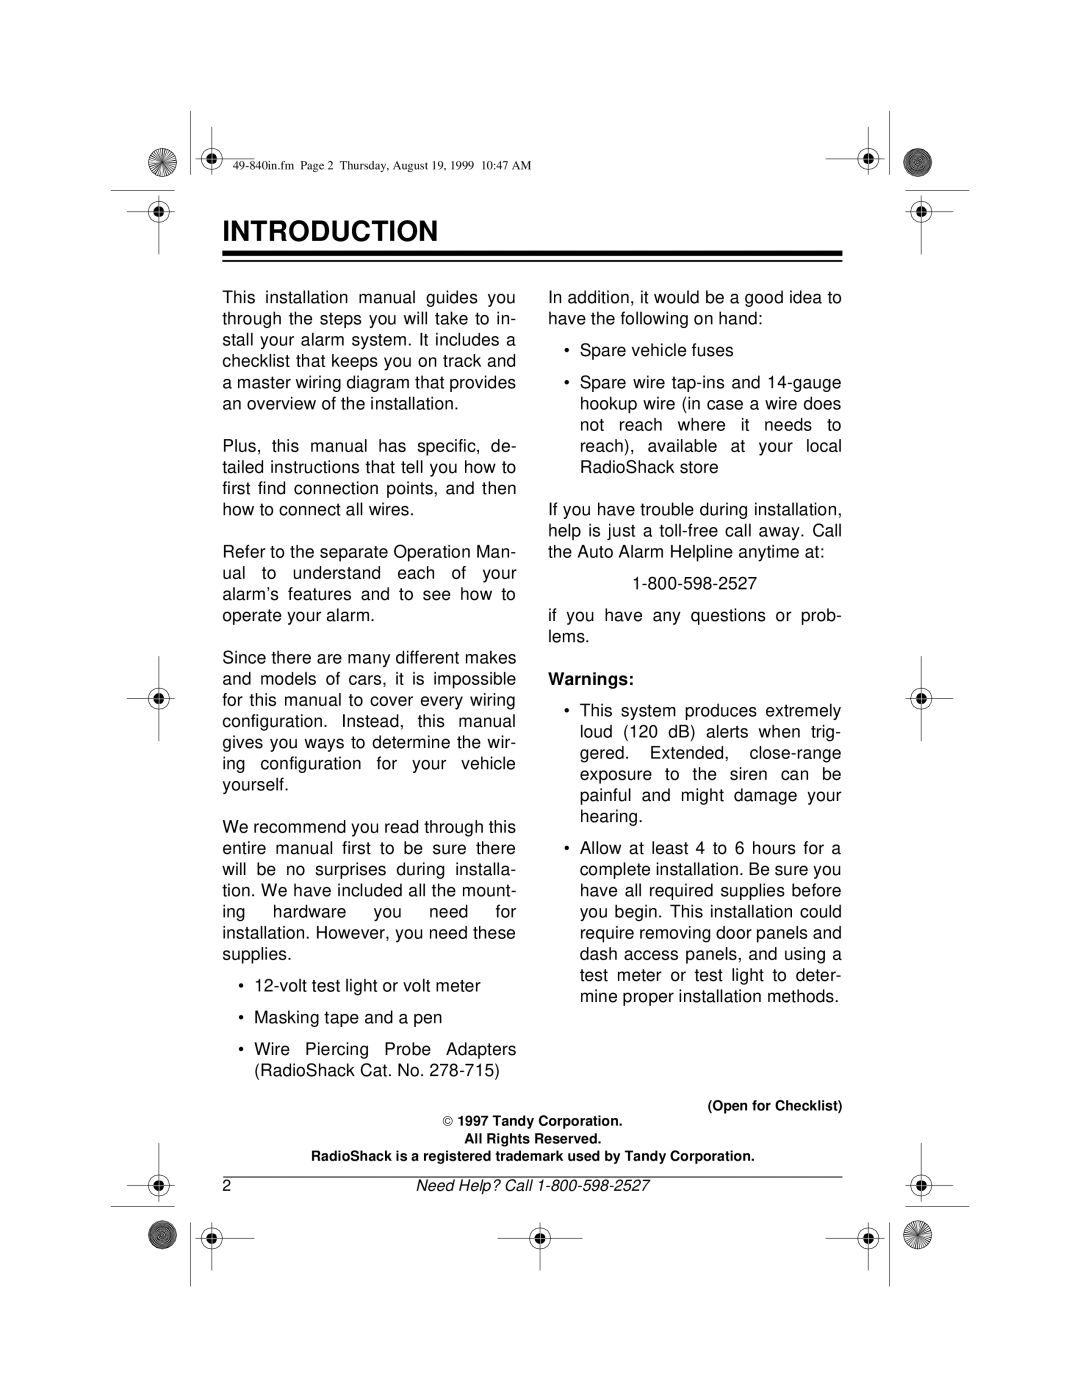 Radio Shack RS-4000 installation manual Introduction, Warnings 